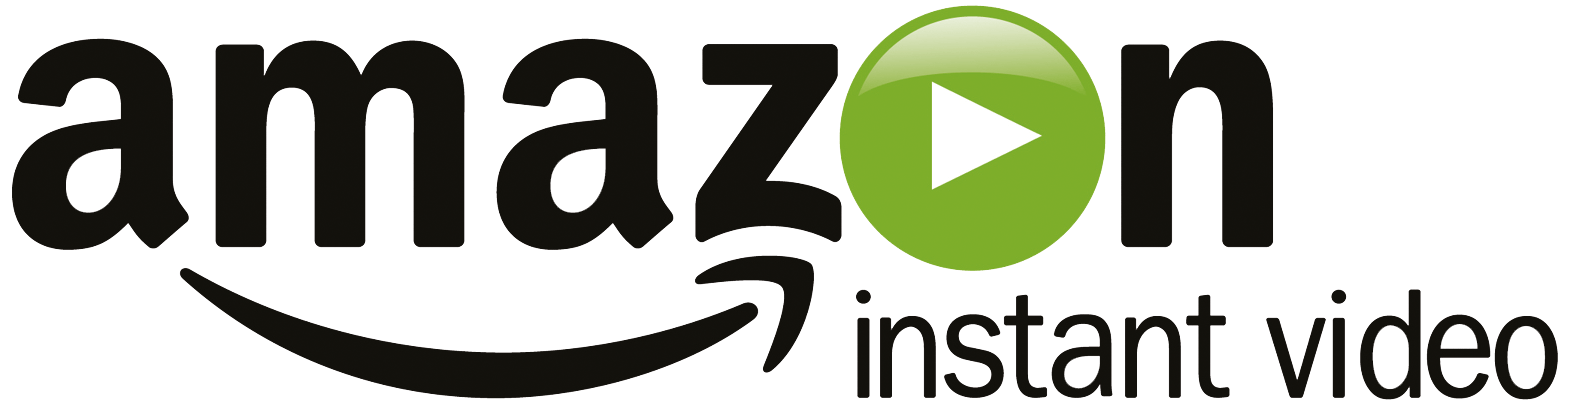 Amazon Video Logo - Image - Amazon-Instant-Video.png | Logopedia | FANDOM powered by Wikia